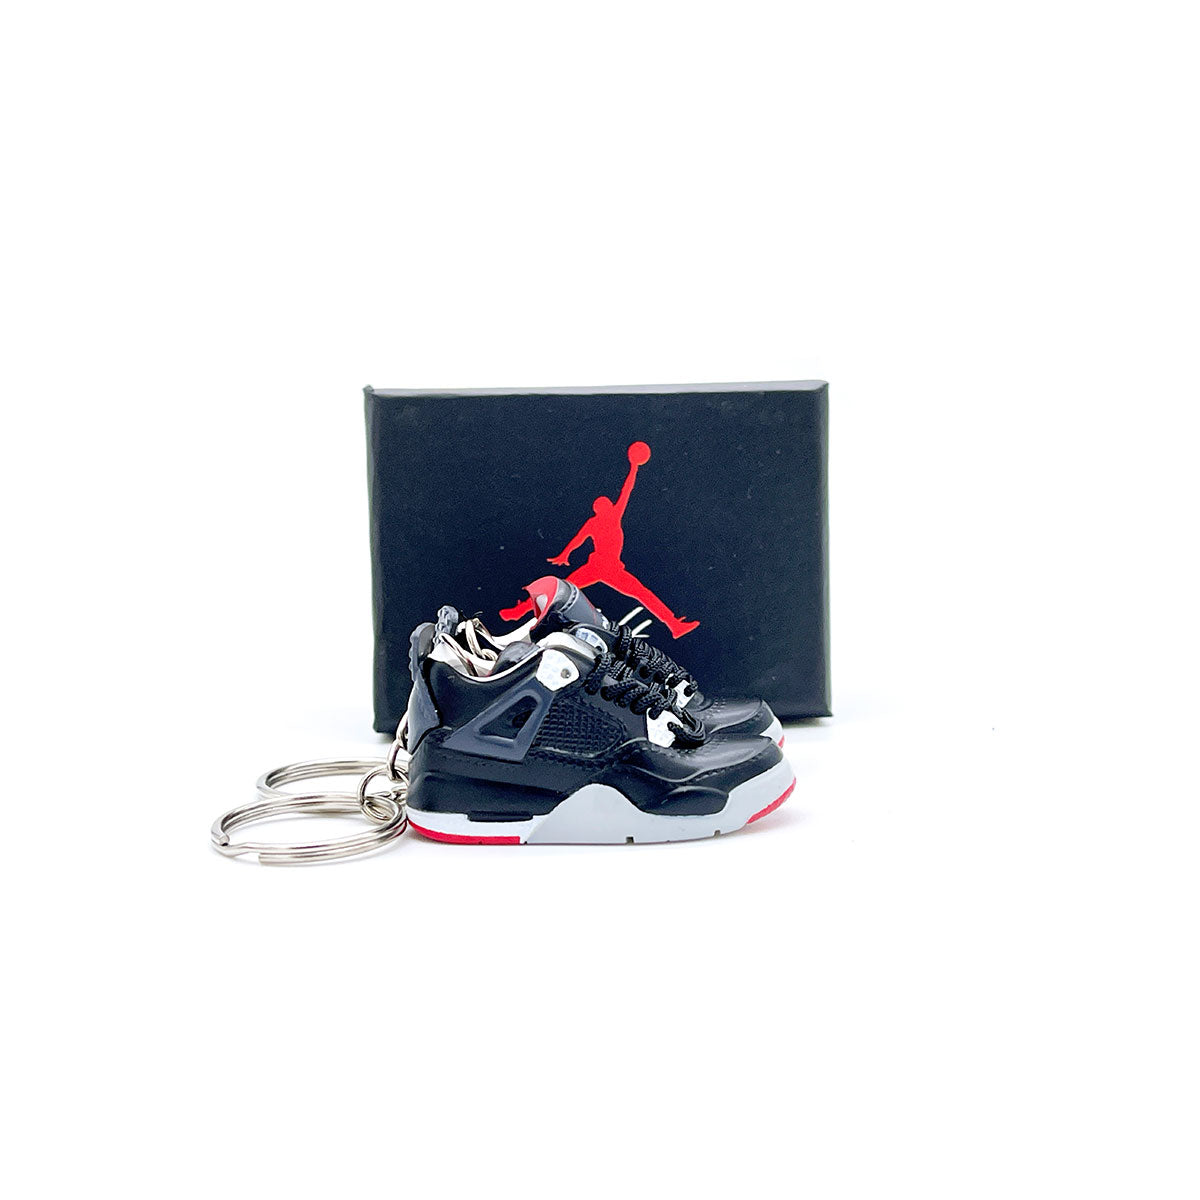 3D Sneaker Keychain- Air Jordan 4 Bred Pair